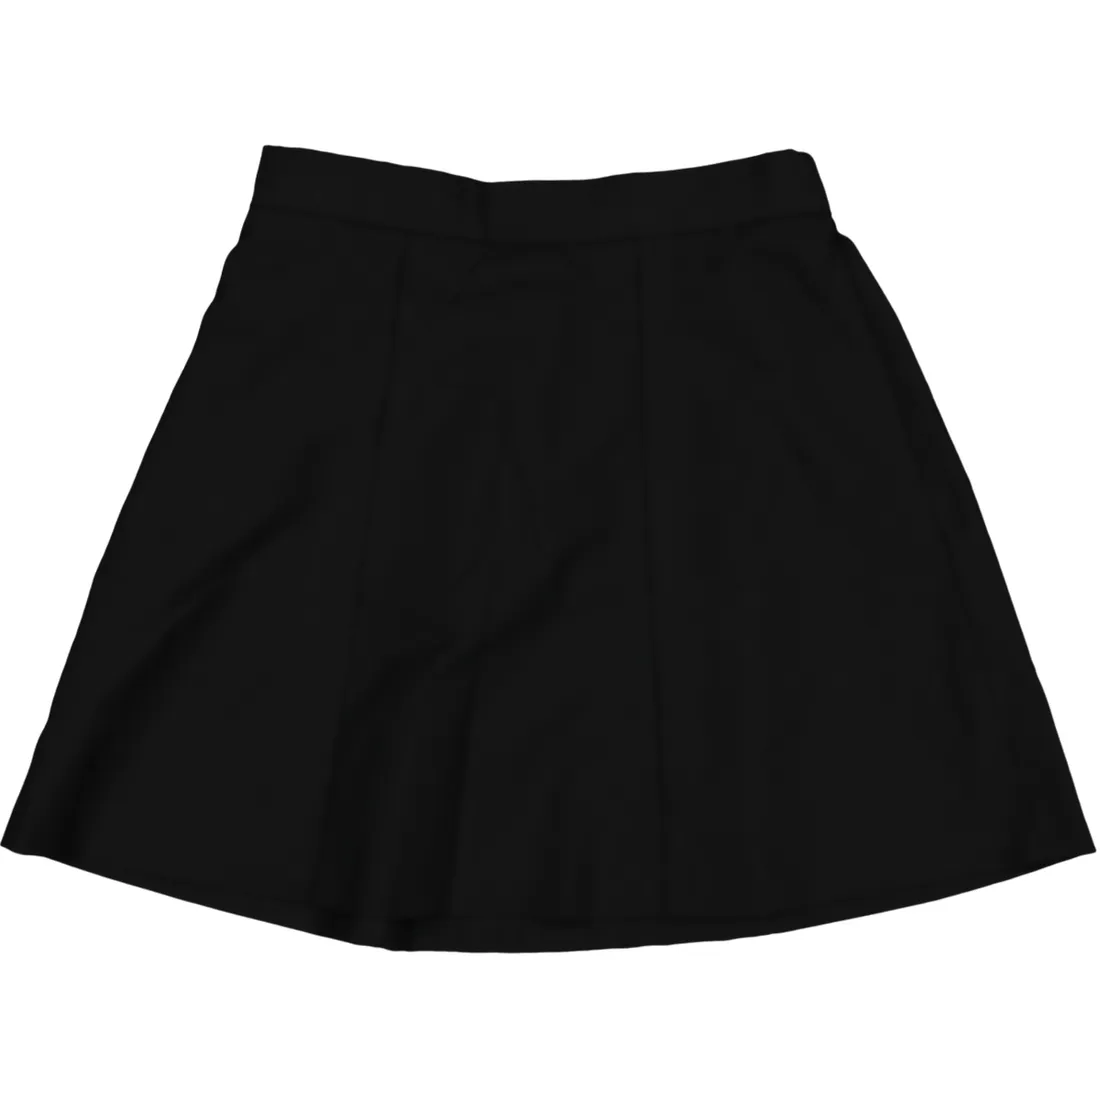 Black School Skirt | School | PEP